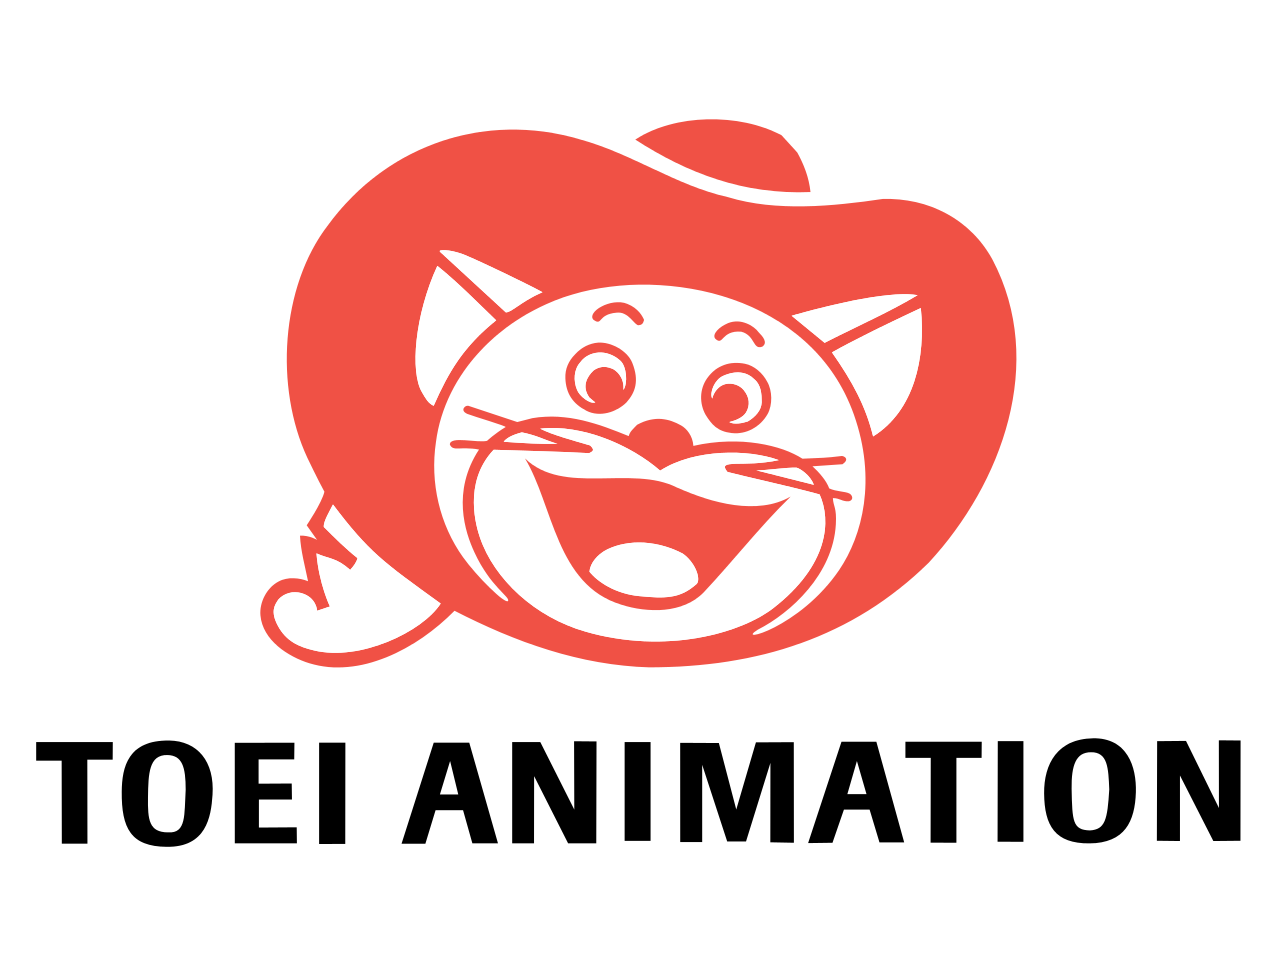 Toei Animation - Wikipedia, the free encyclopedia